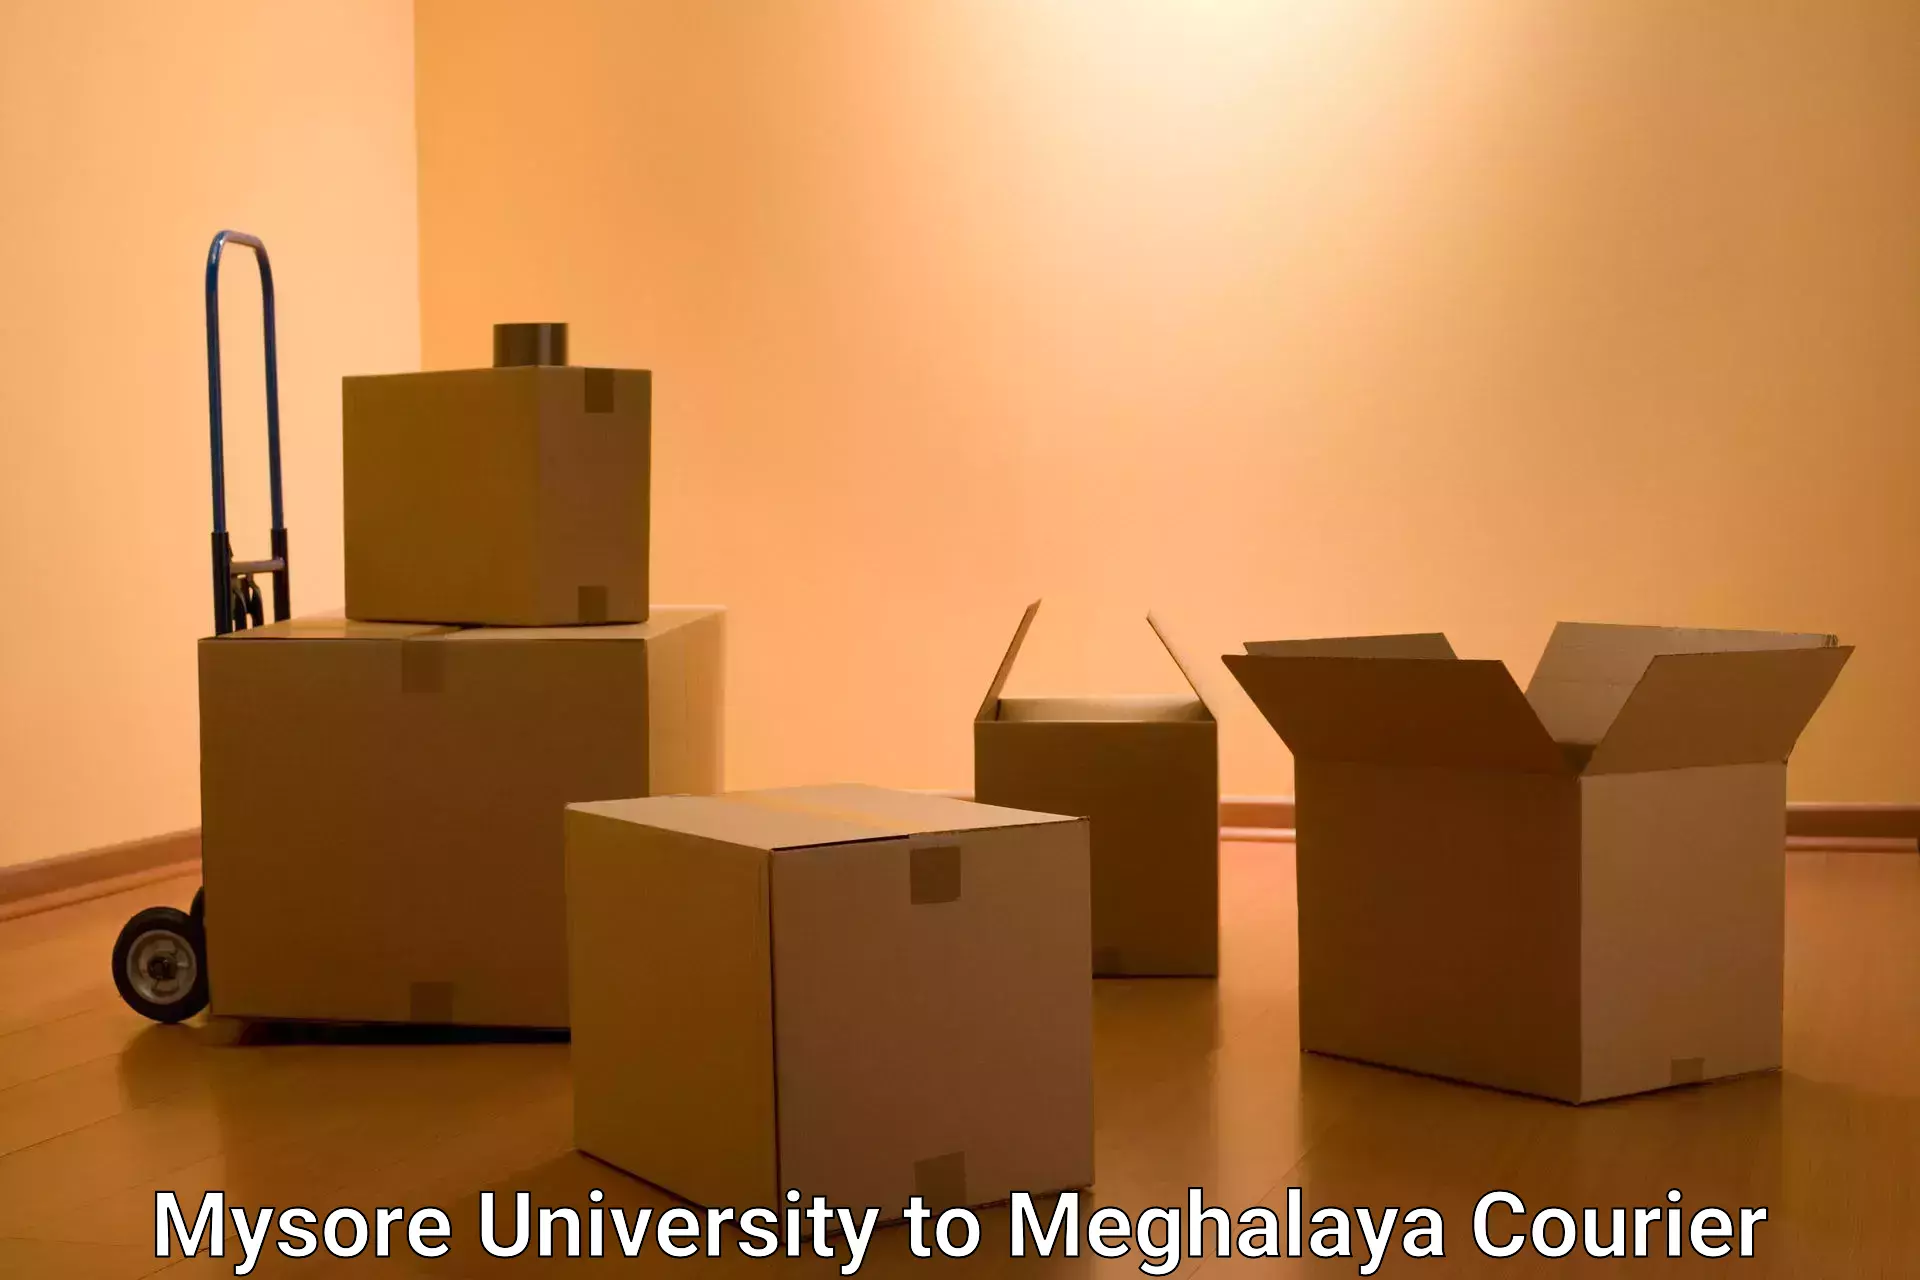 Speedy delivery service Mysore University to Umsaw